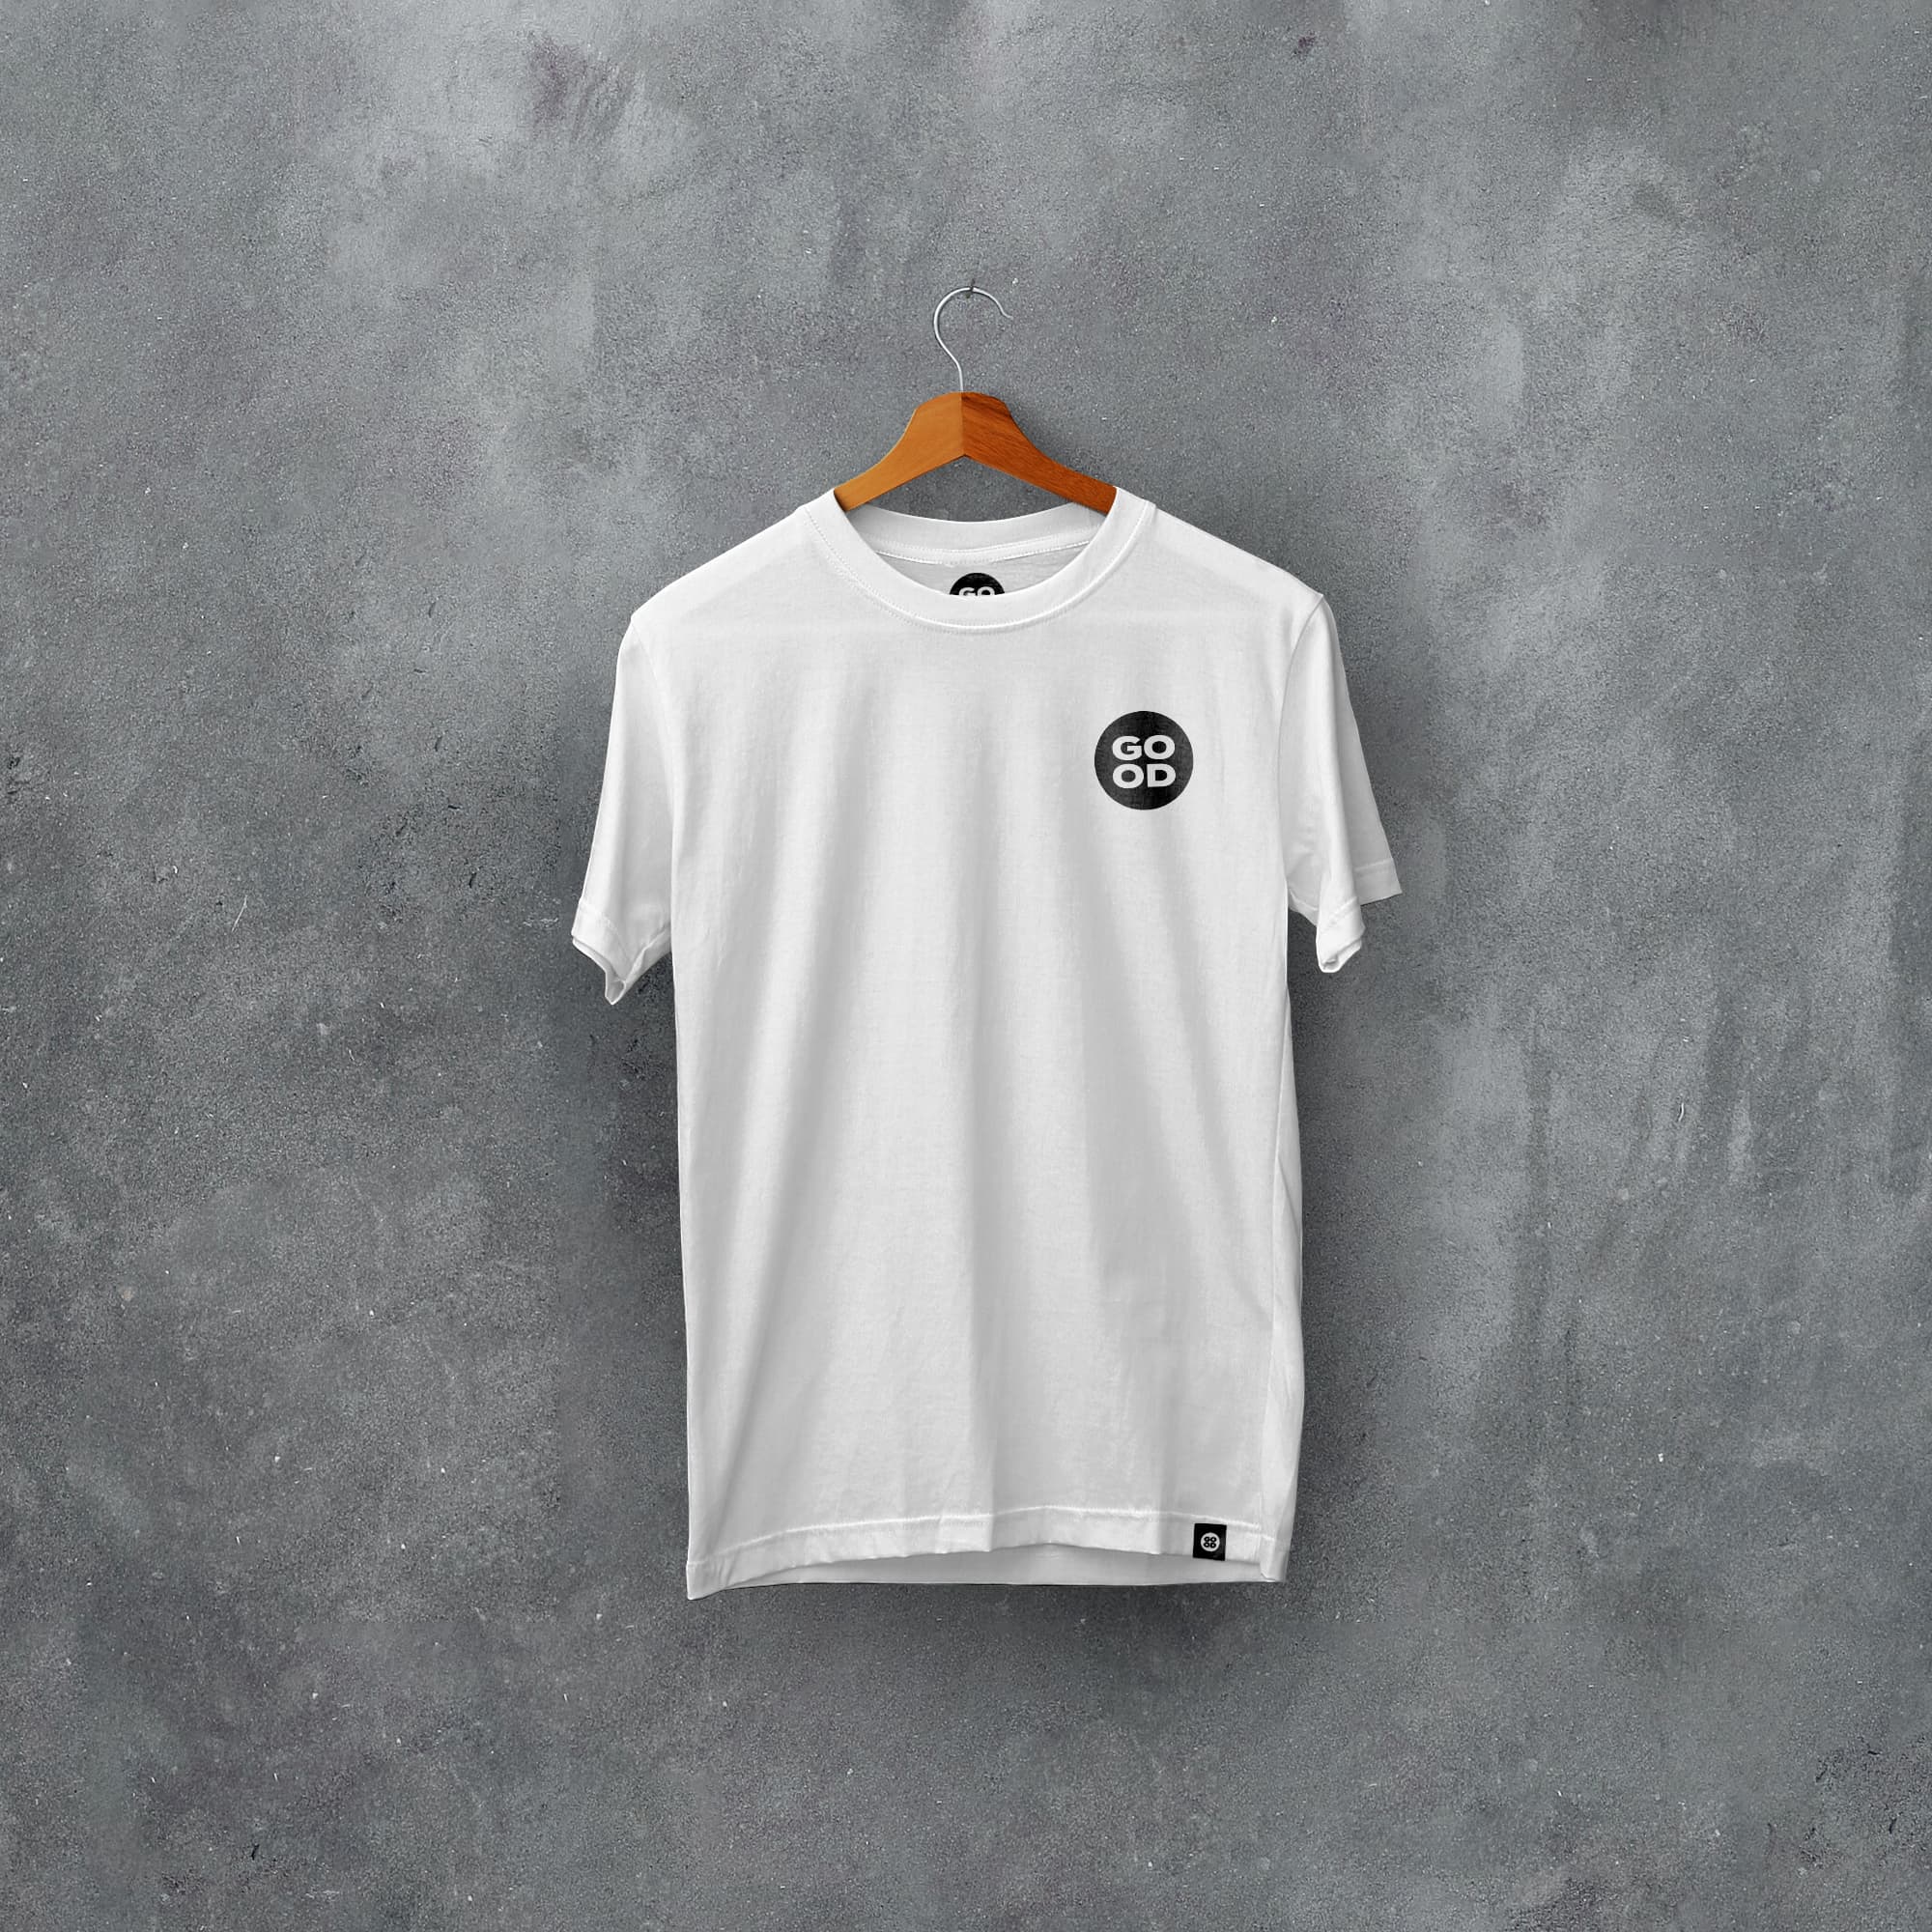 Fenerbahce Classic Kits Football T-Shirt